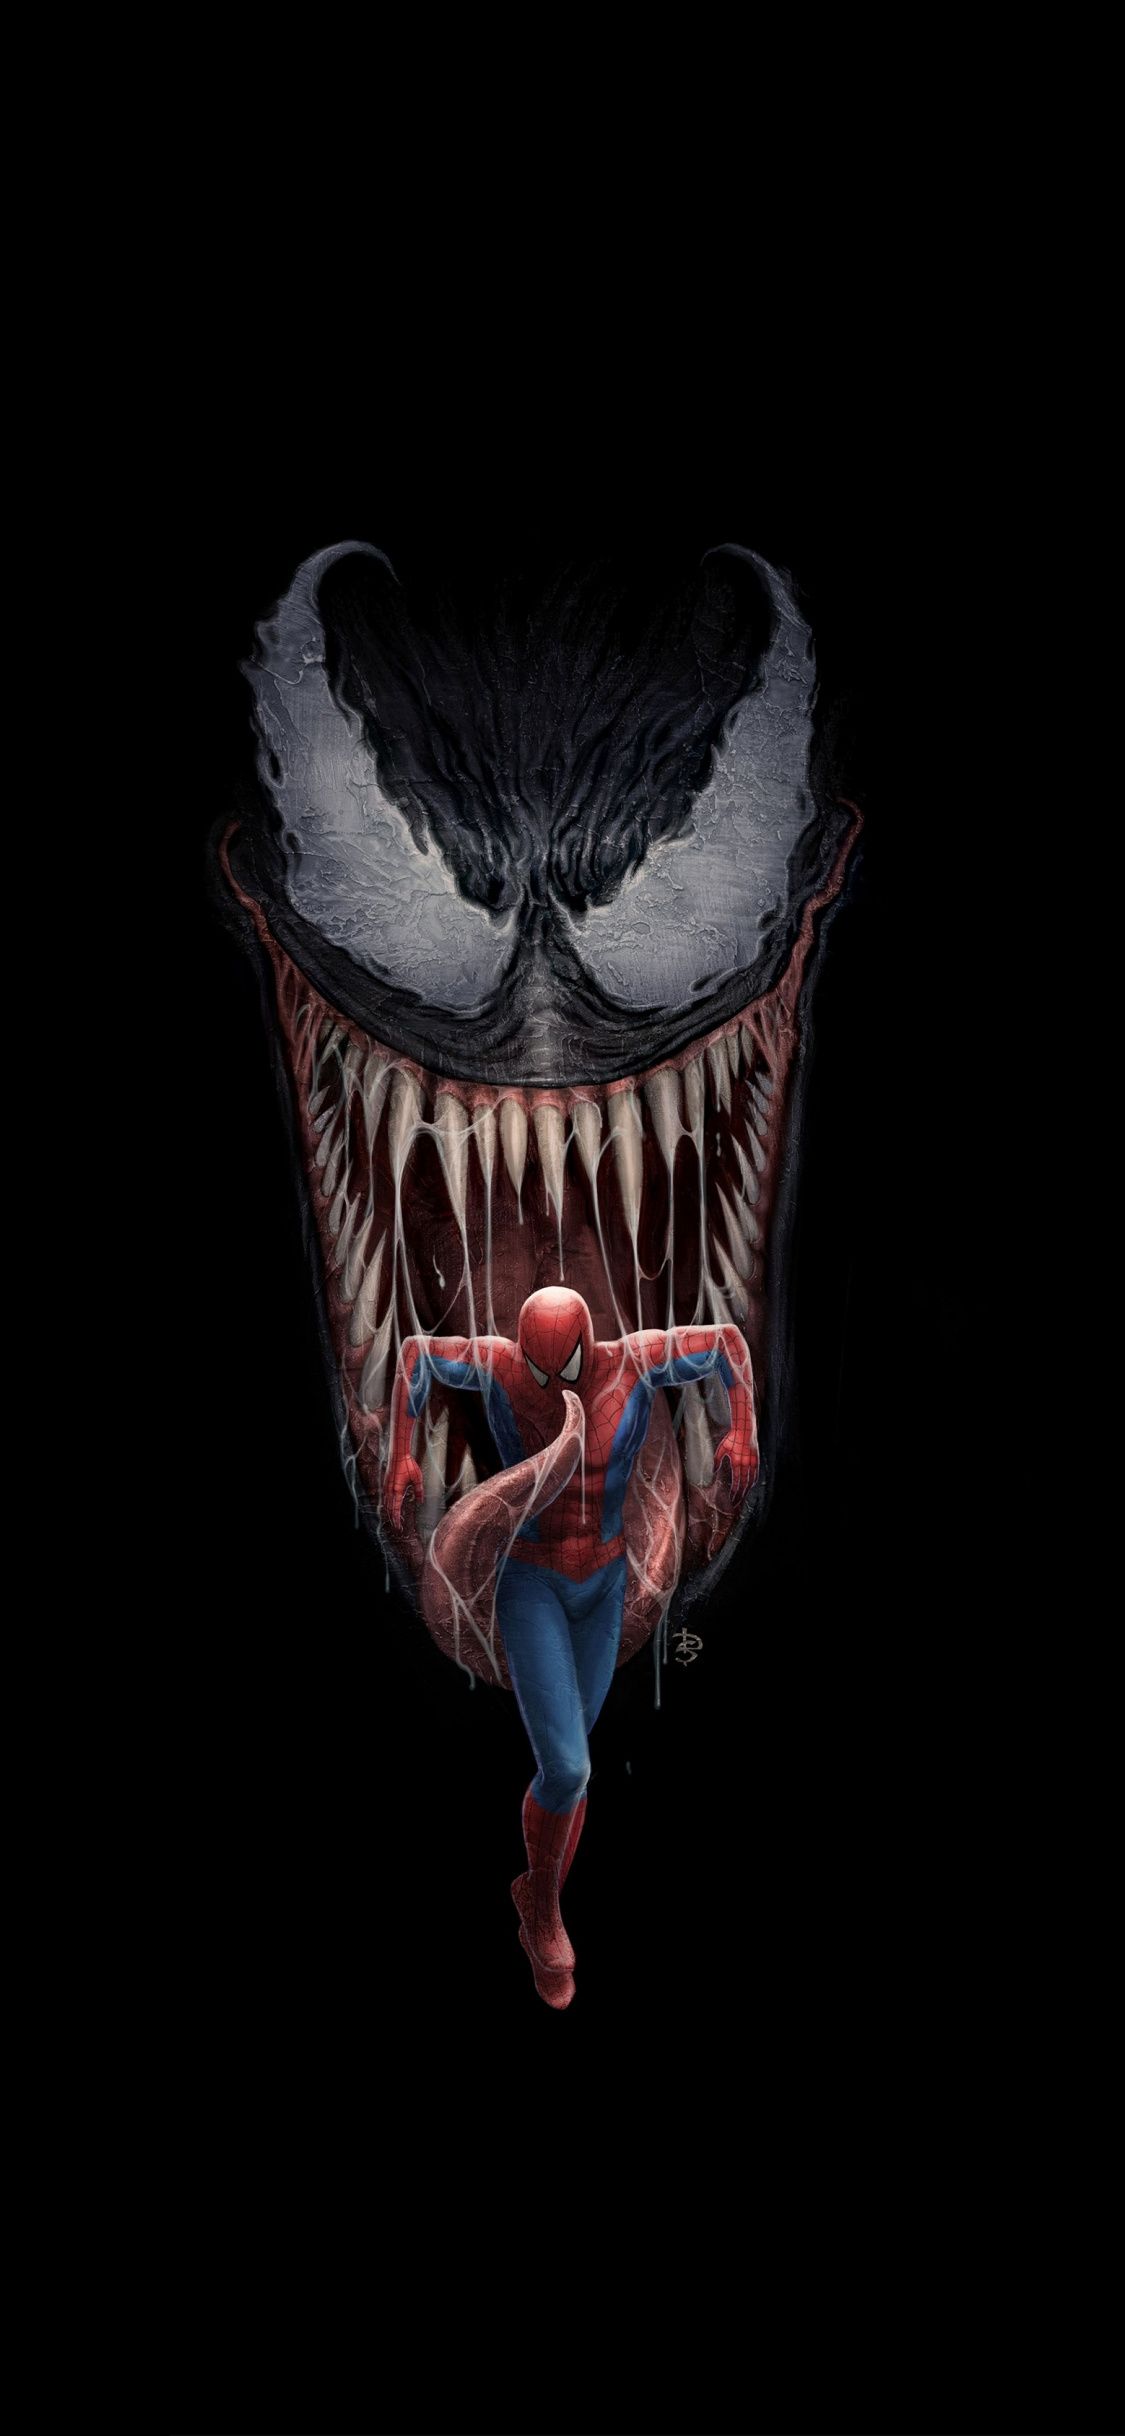 Spider Man And Venom, Minimal, Artwork Wallpaper, 6000x HD Image, Picture, Dd14b7fe